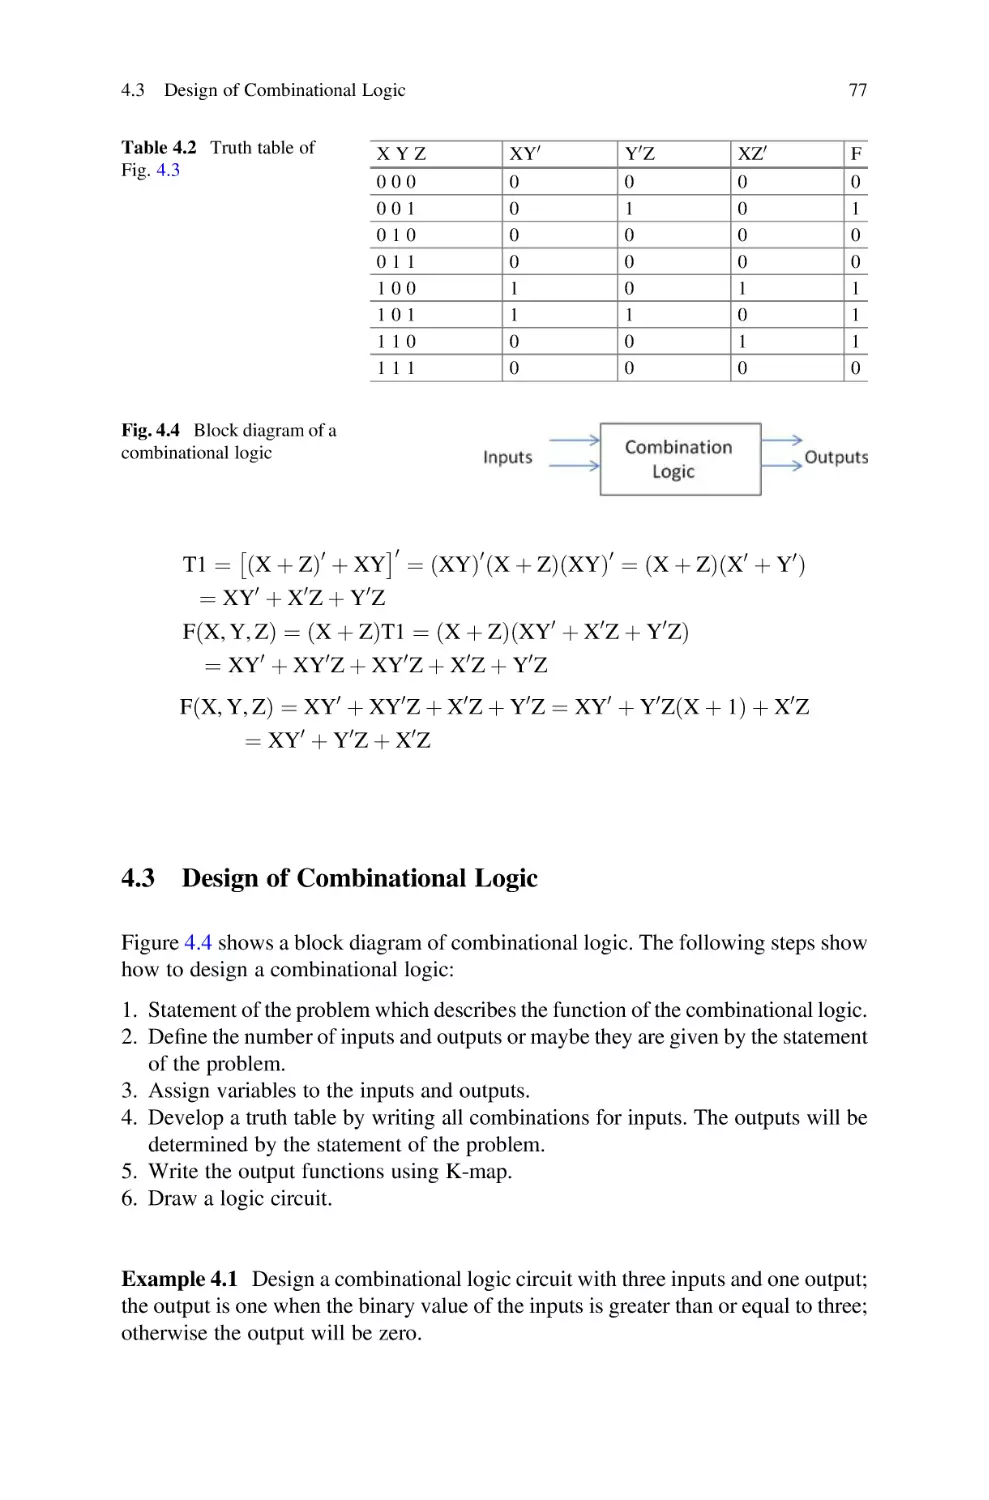 4.3 Design of Combinational Logic